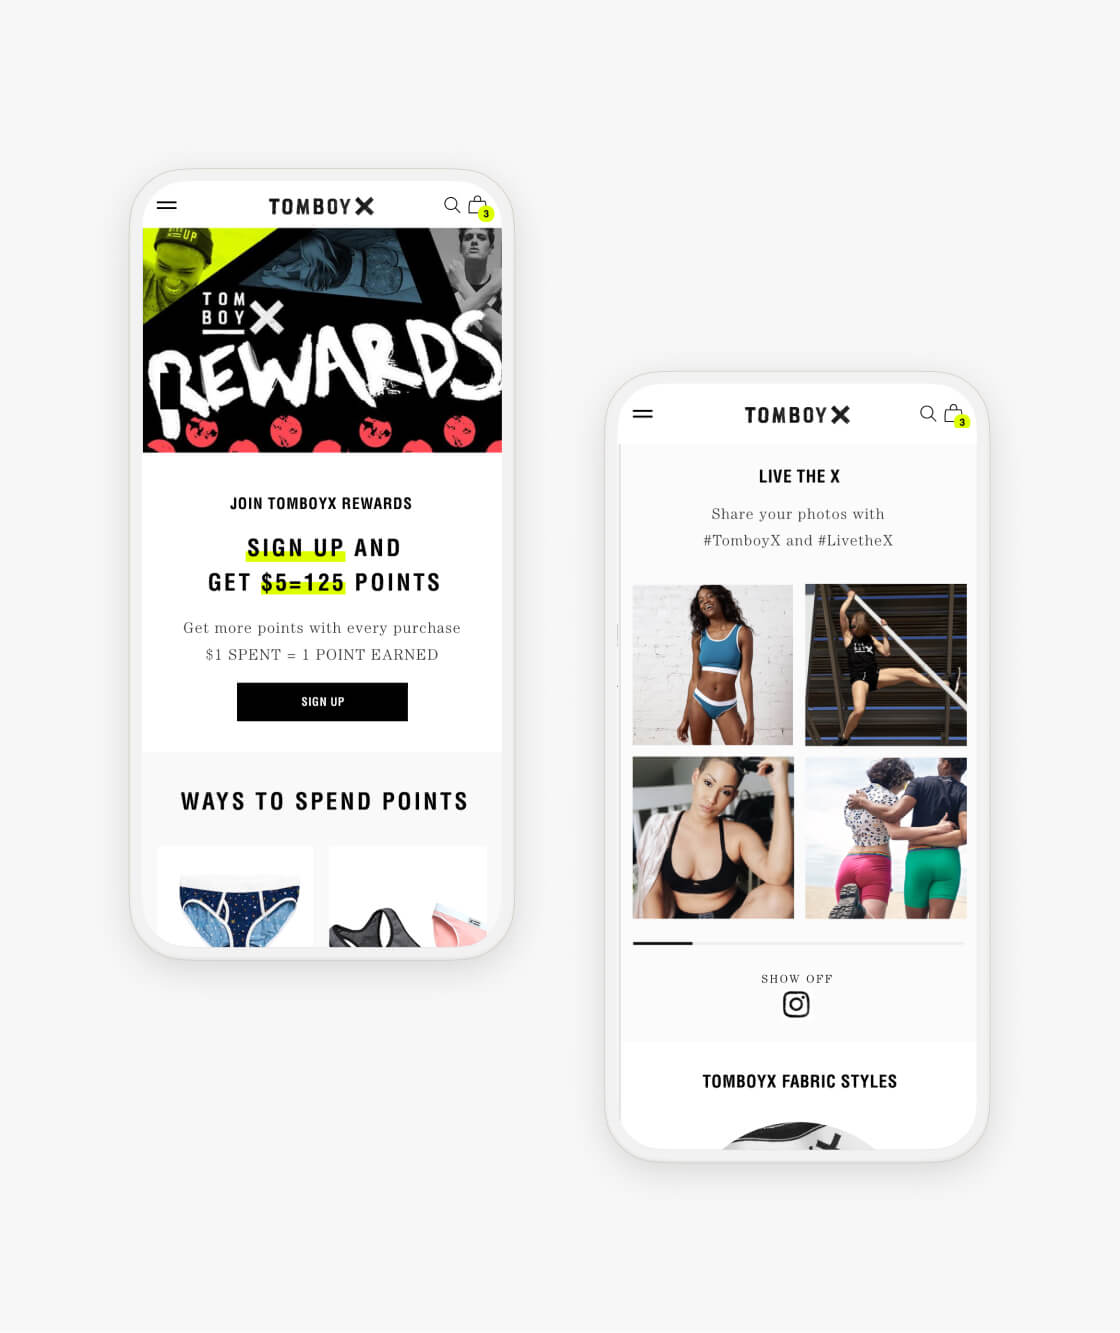 tomboy x rewards program pages on mobile